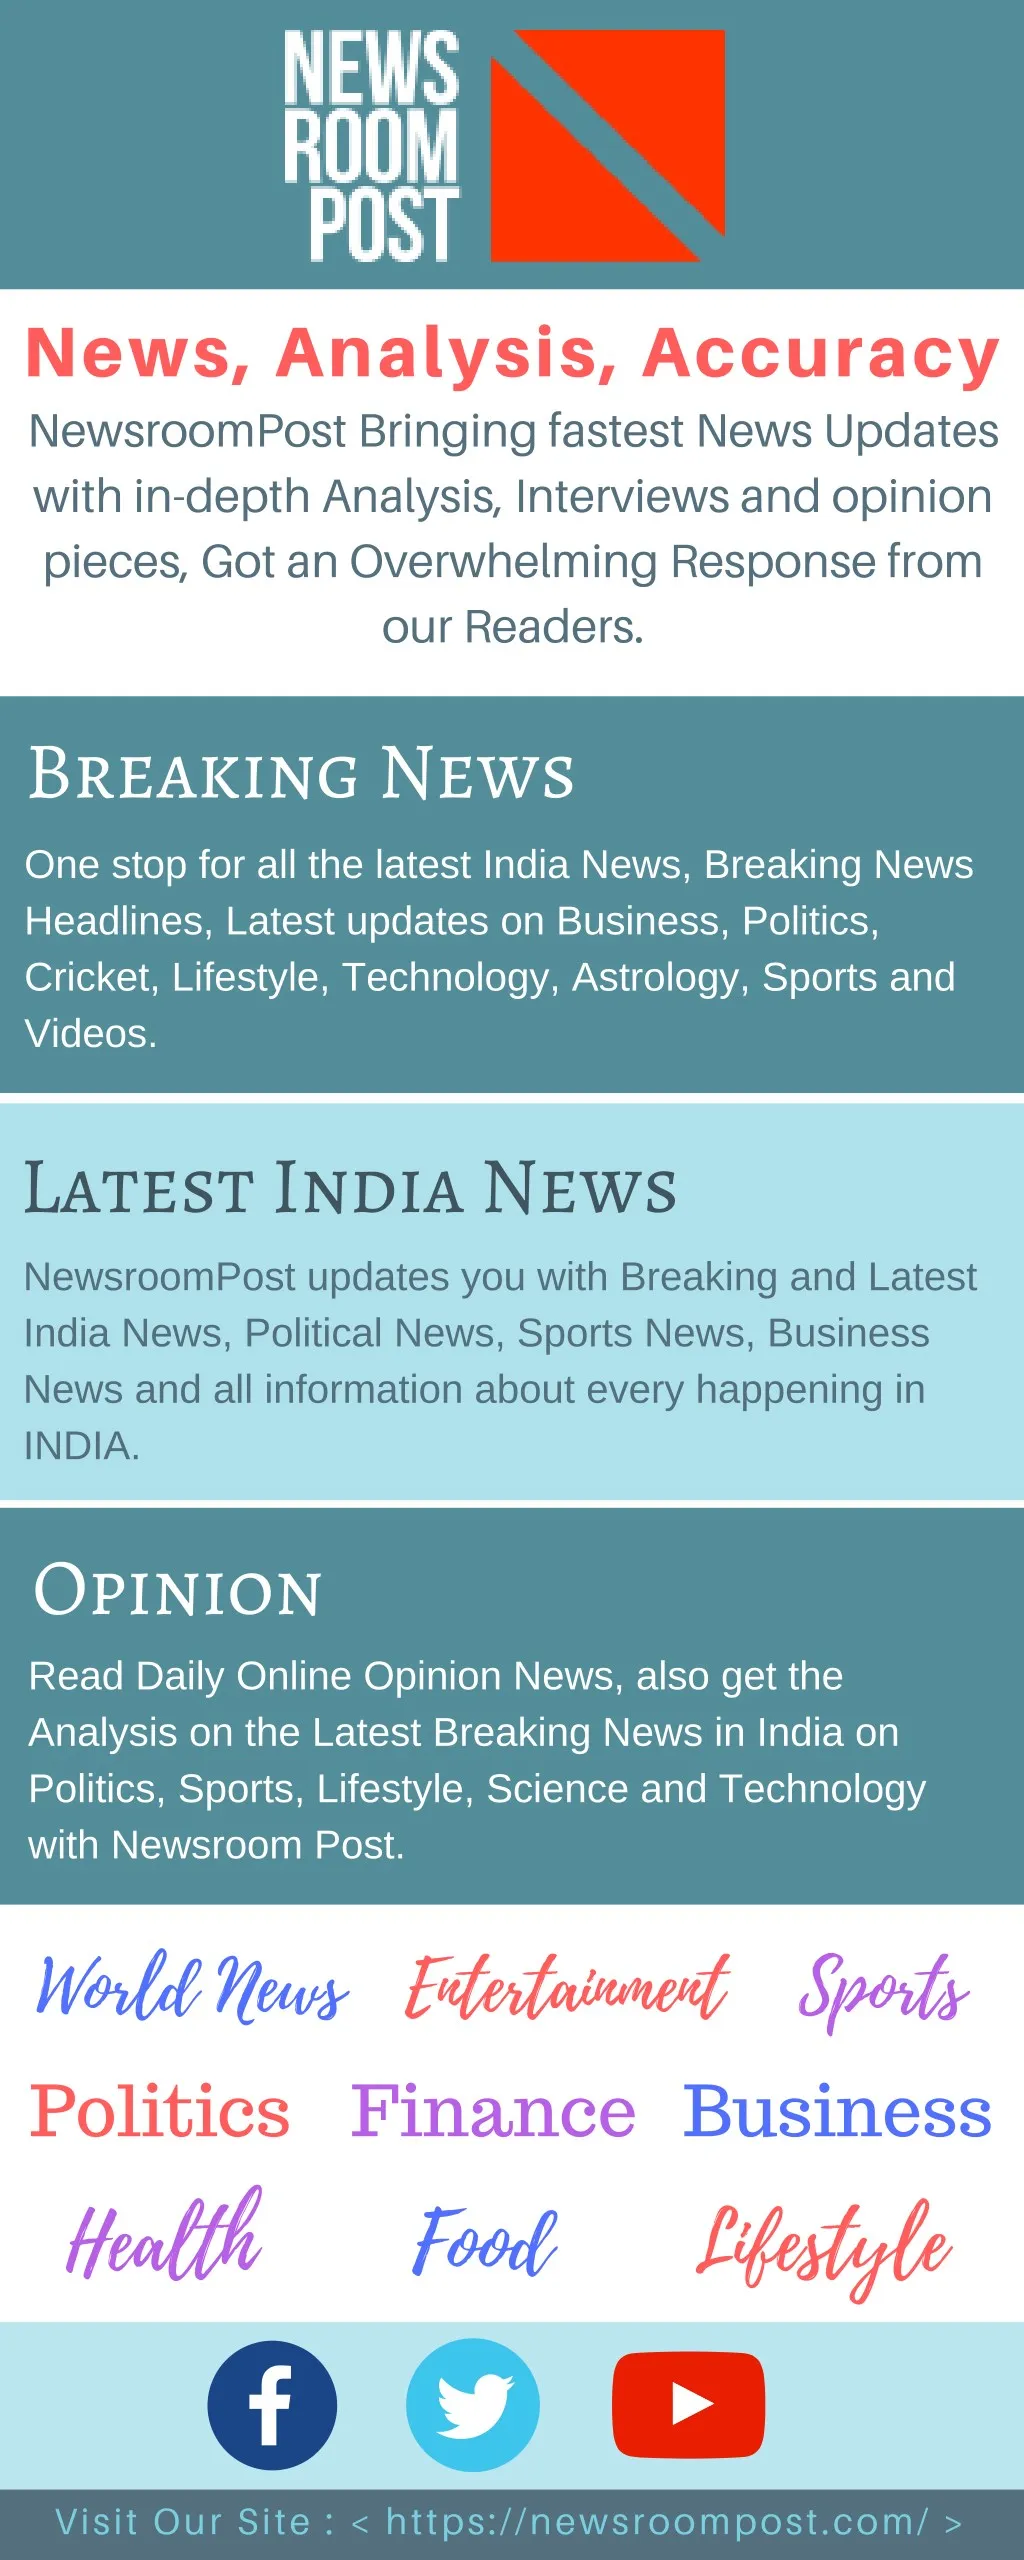 news analysis accuracy newsroompost bringing